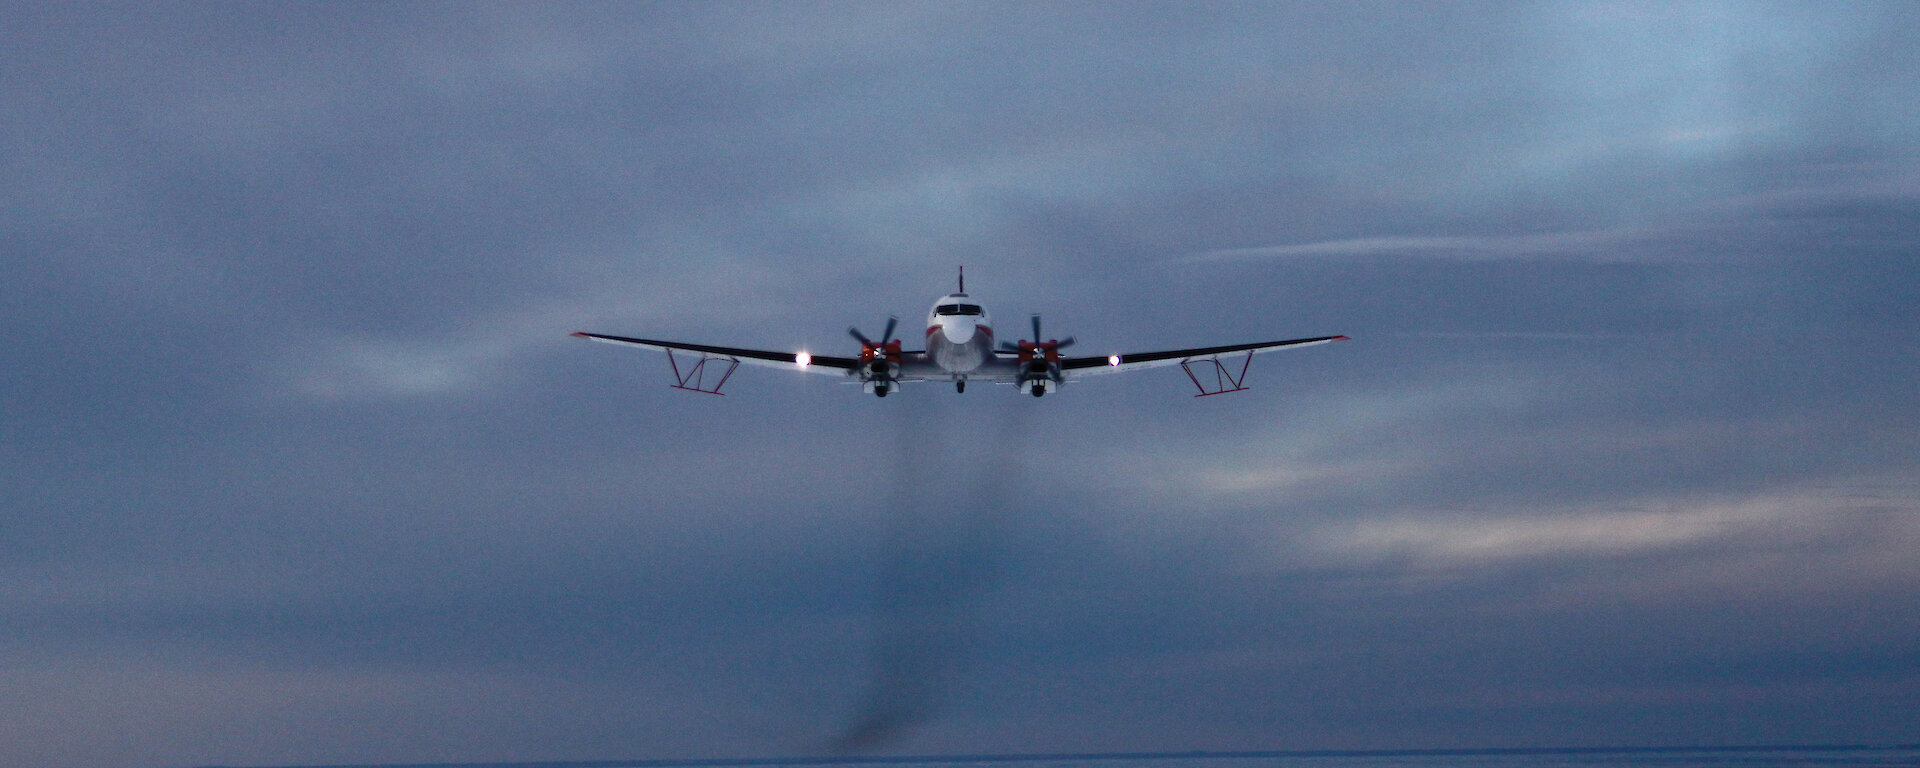 The ICECAP plane taking off (Photo: Jack Holt)